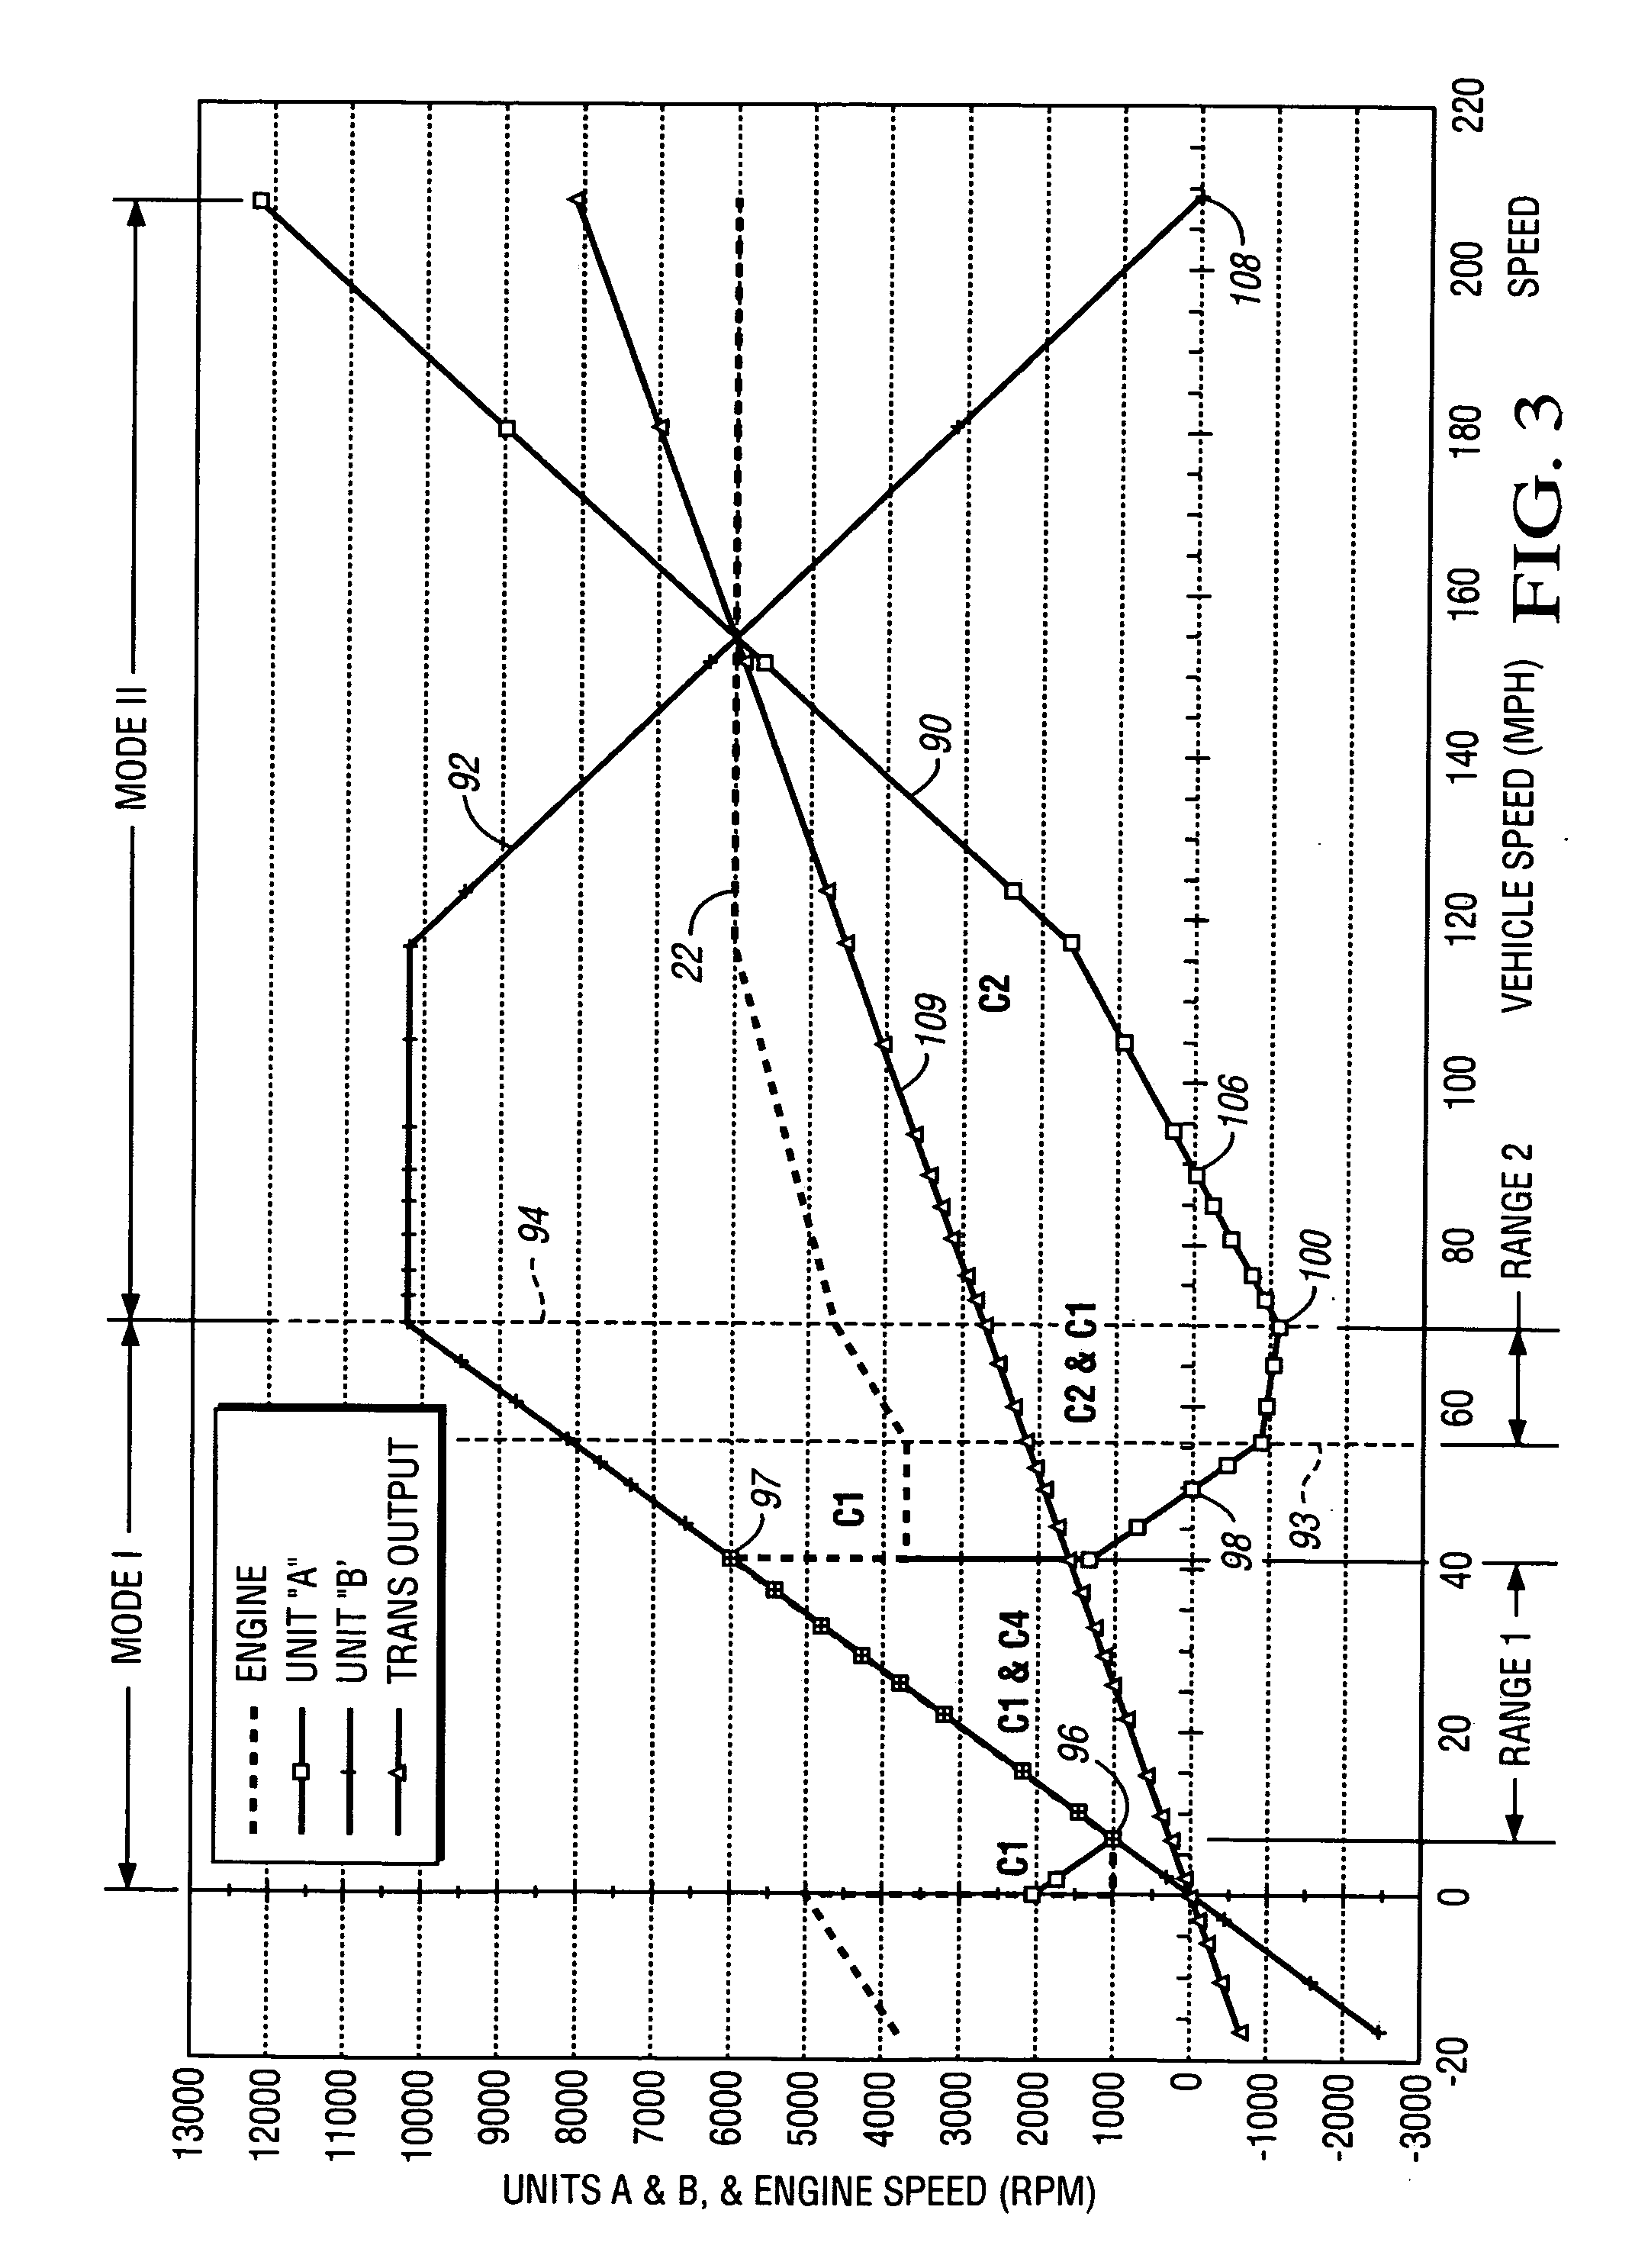 Two-mode, compound-split, hybrid electro-mechanical transmission having four fixed ratios